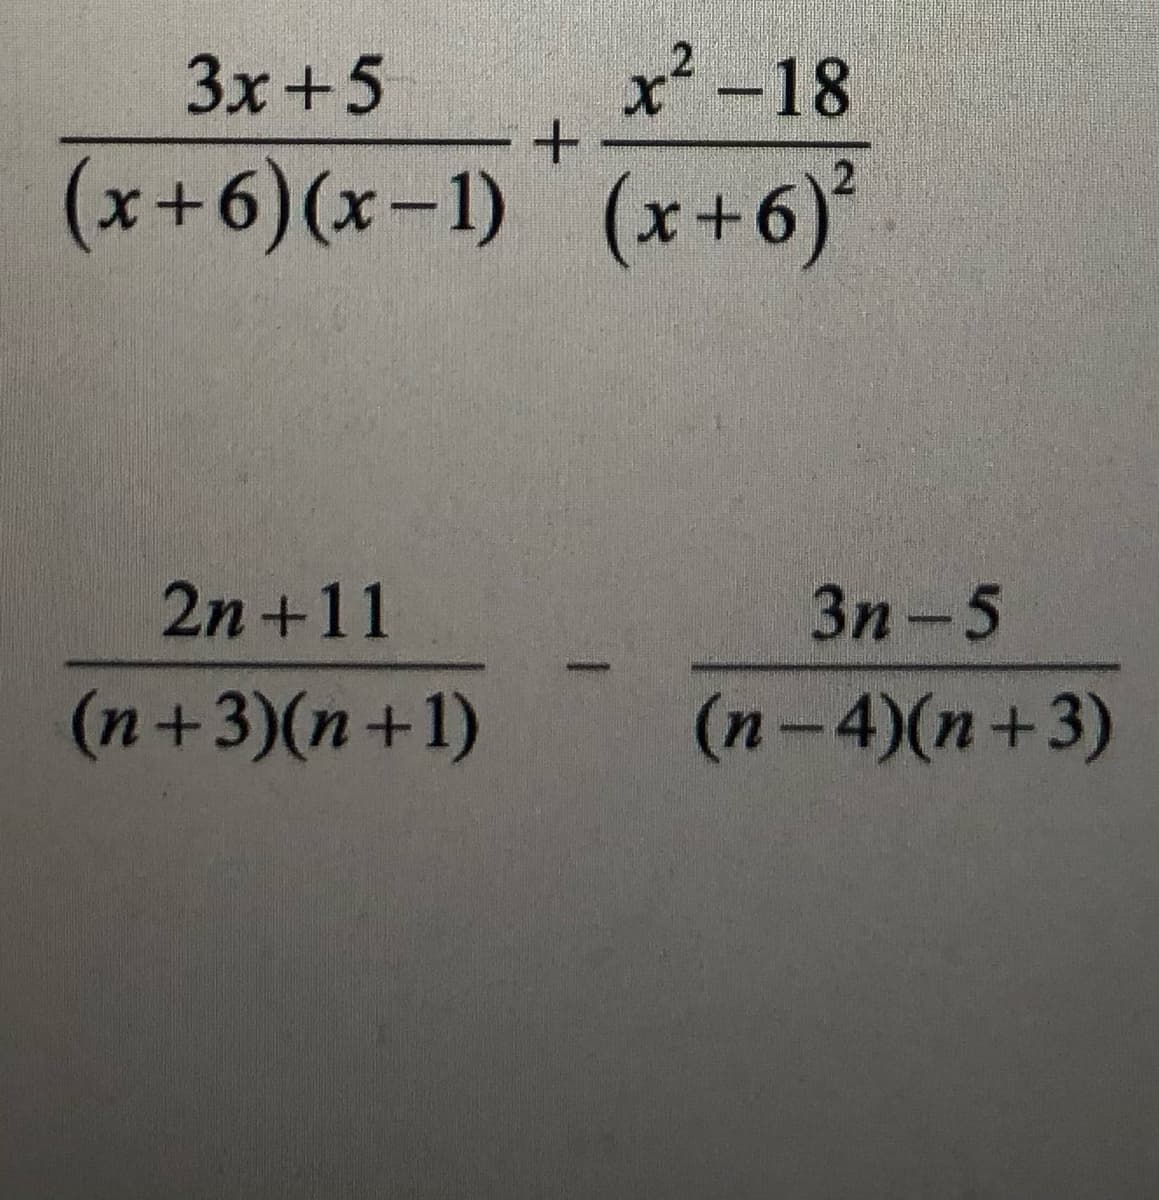 Зx+5
x² -18
(x+6)(x-1) (x+6)
2n +11
3n-5
(п+3)(п +1)
(п-4) (п +3)
